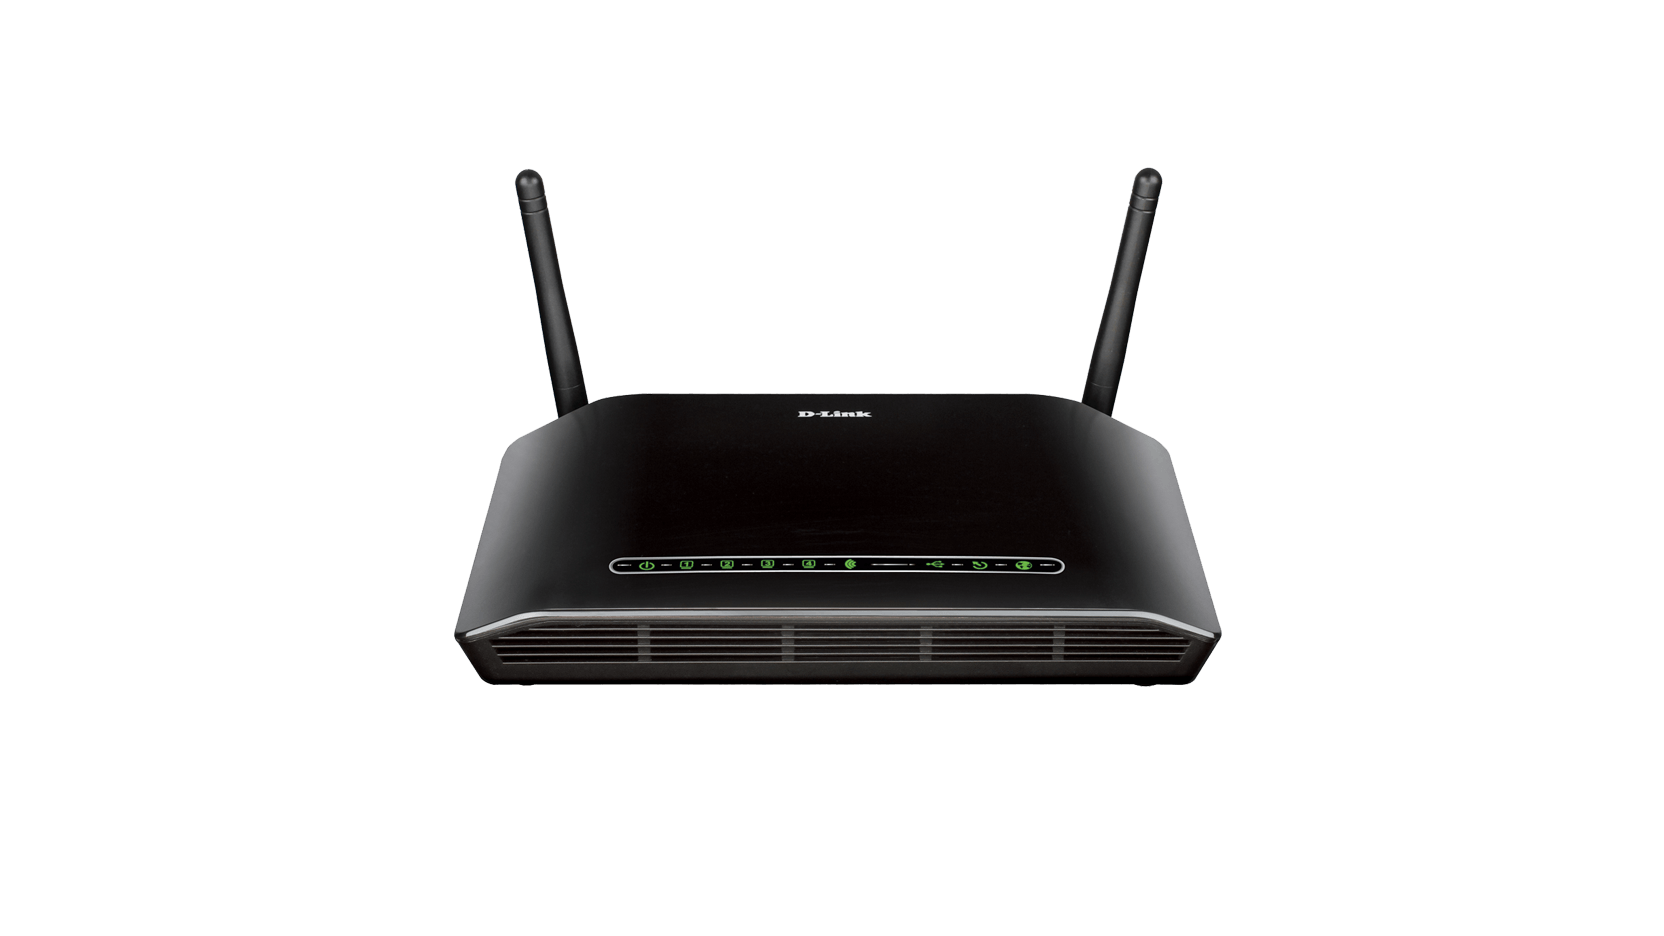 DSL-2750B Wireless N300 ADSL2+ Modem Router | D-Link